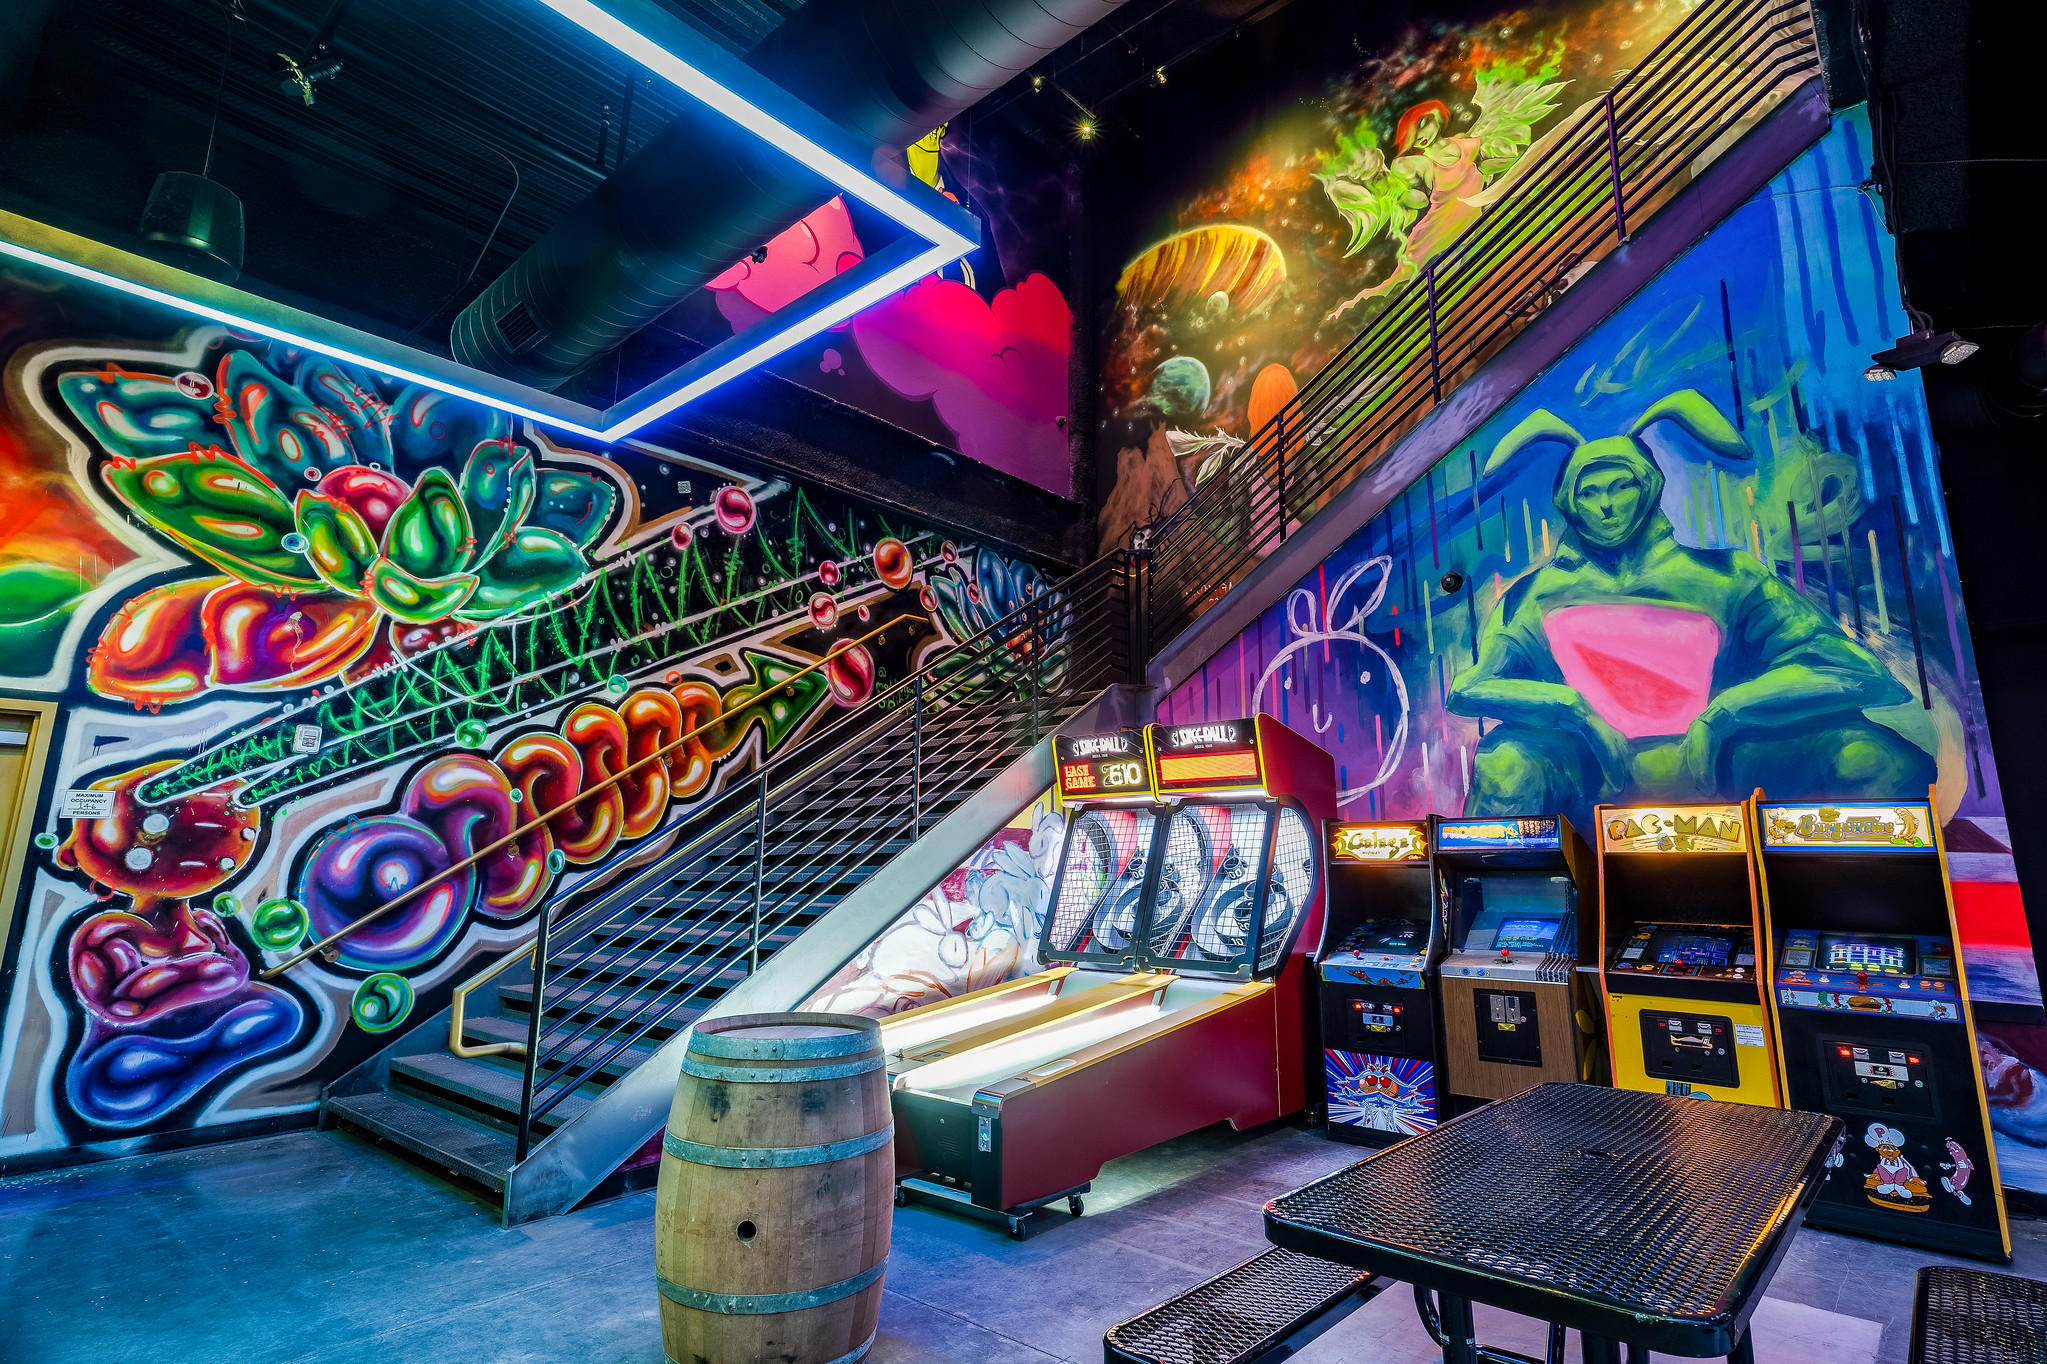 A bar with graffiti art and gaming machines.